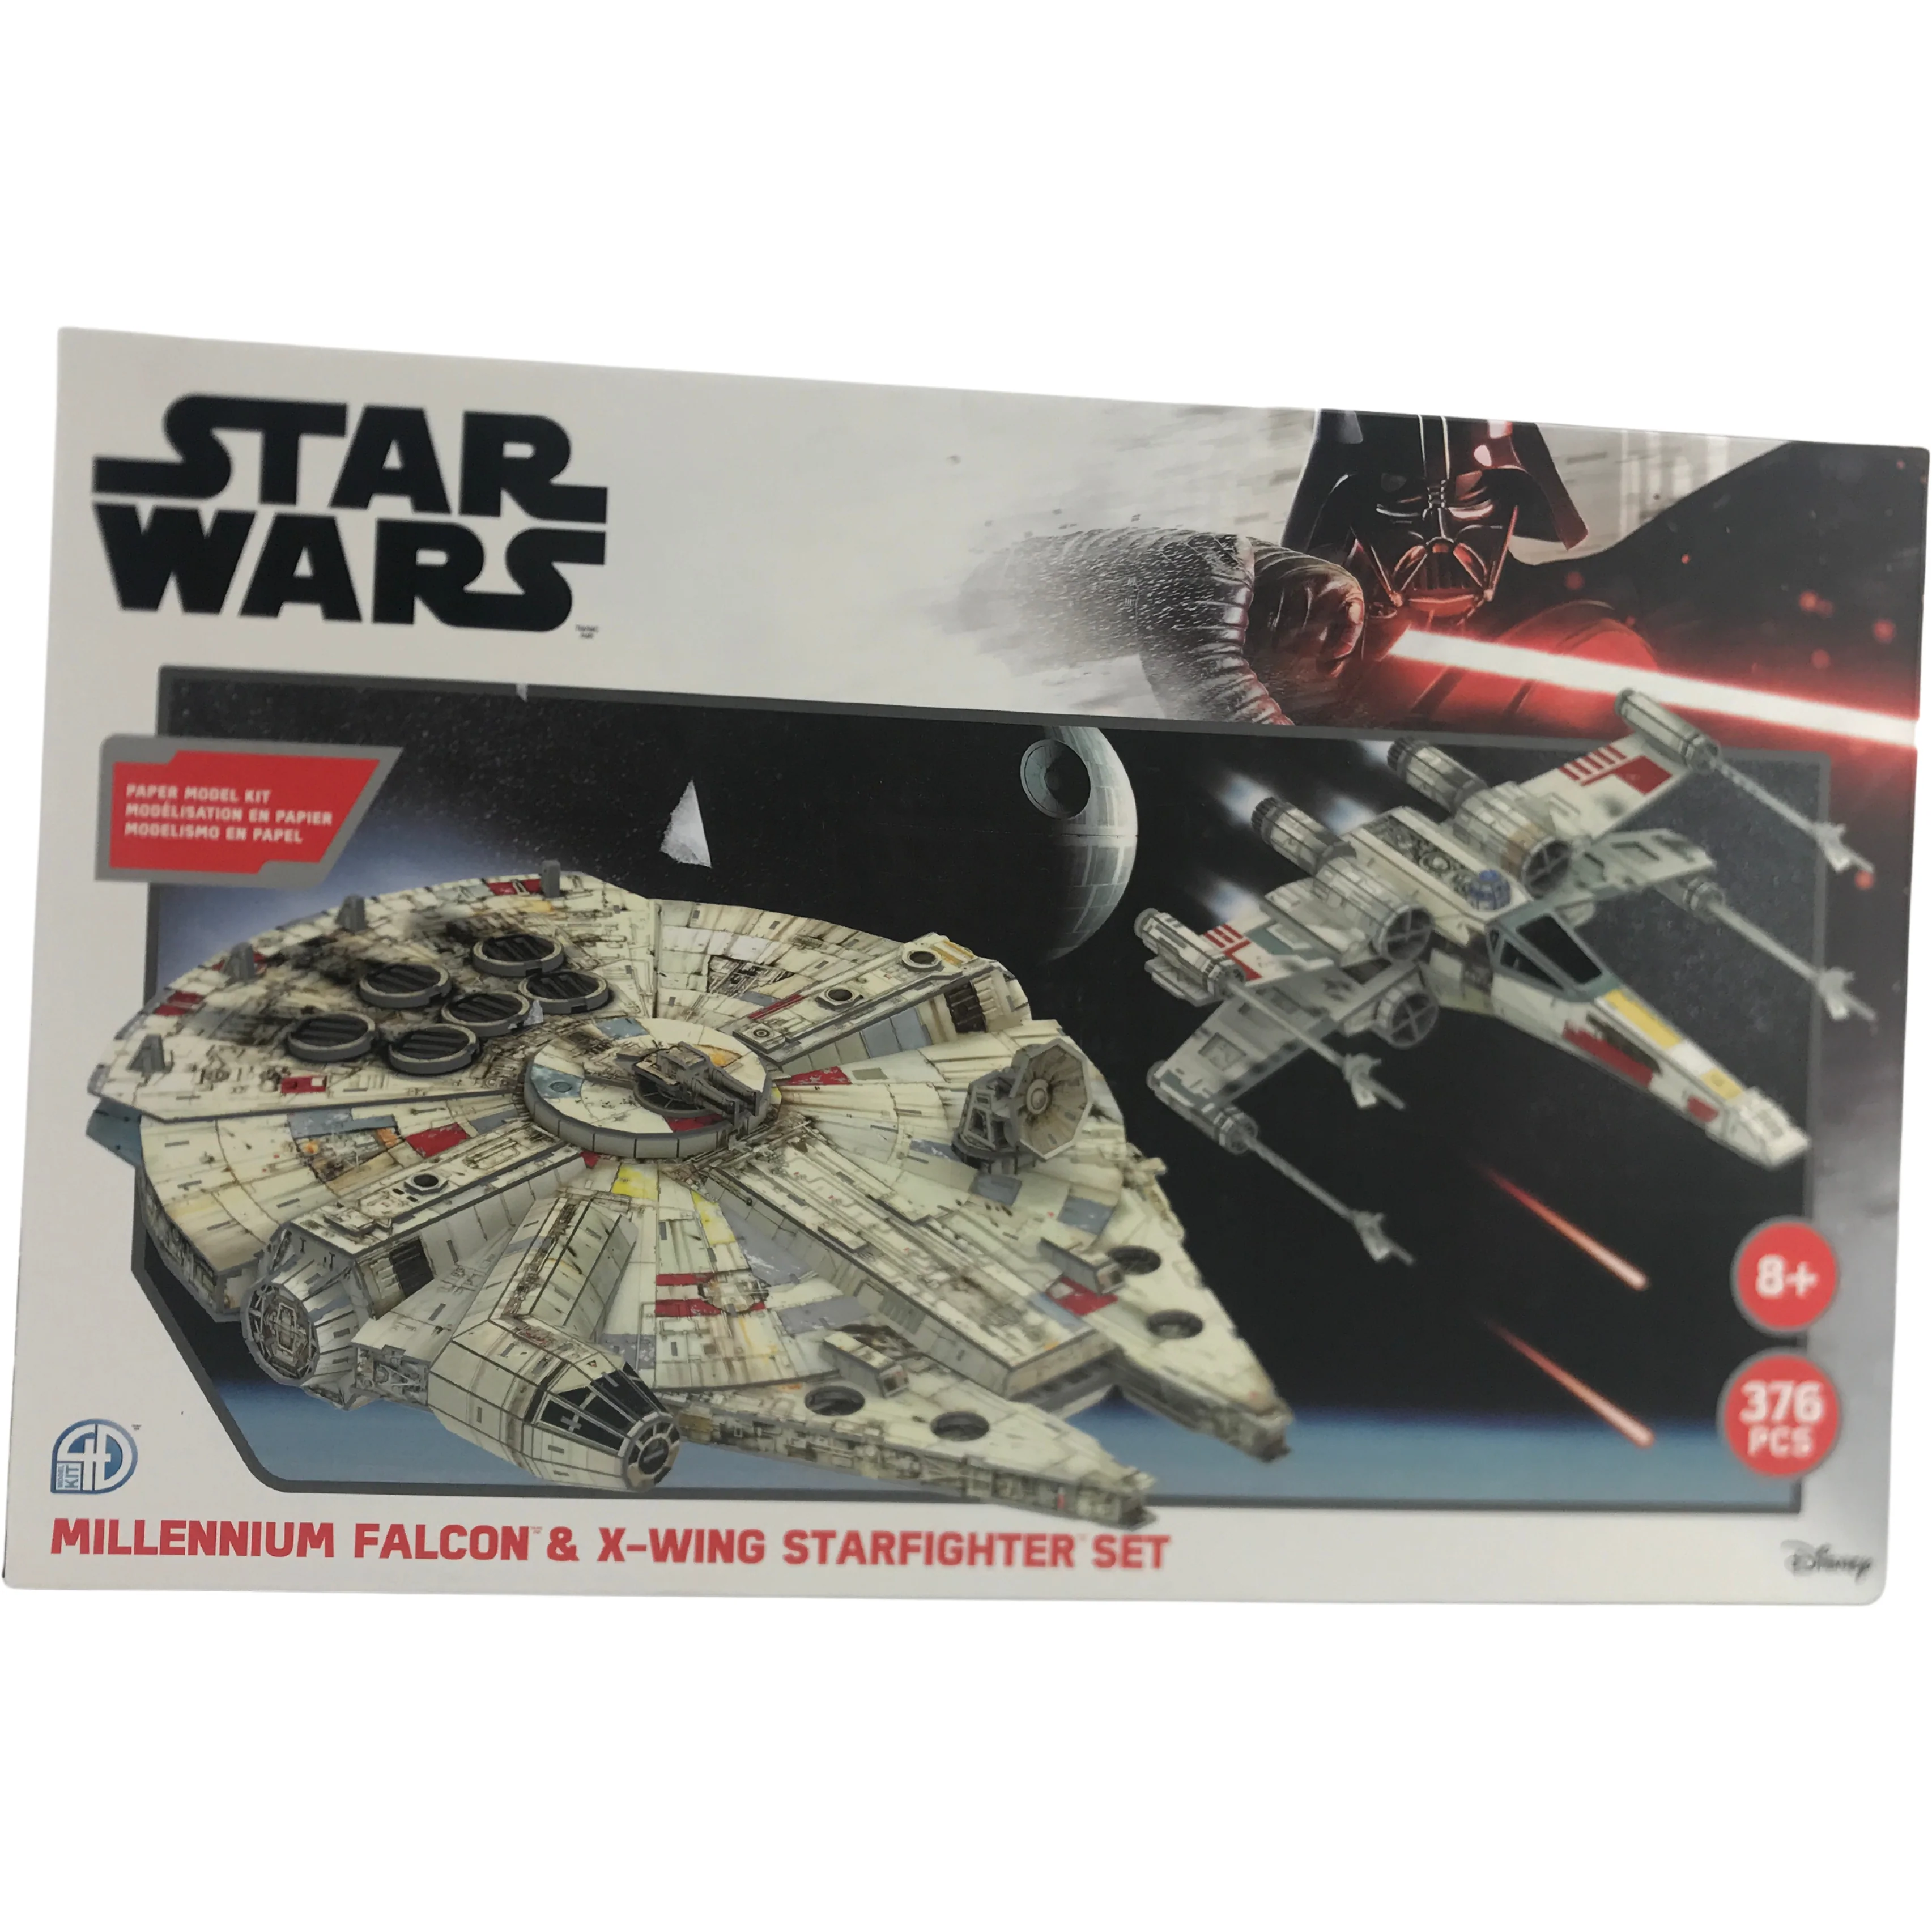 Star Wars Millennium Falcon & X-Wing StarFighter Building Set: 376 pieces